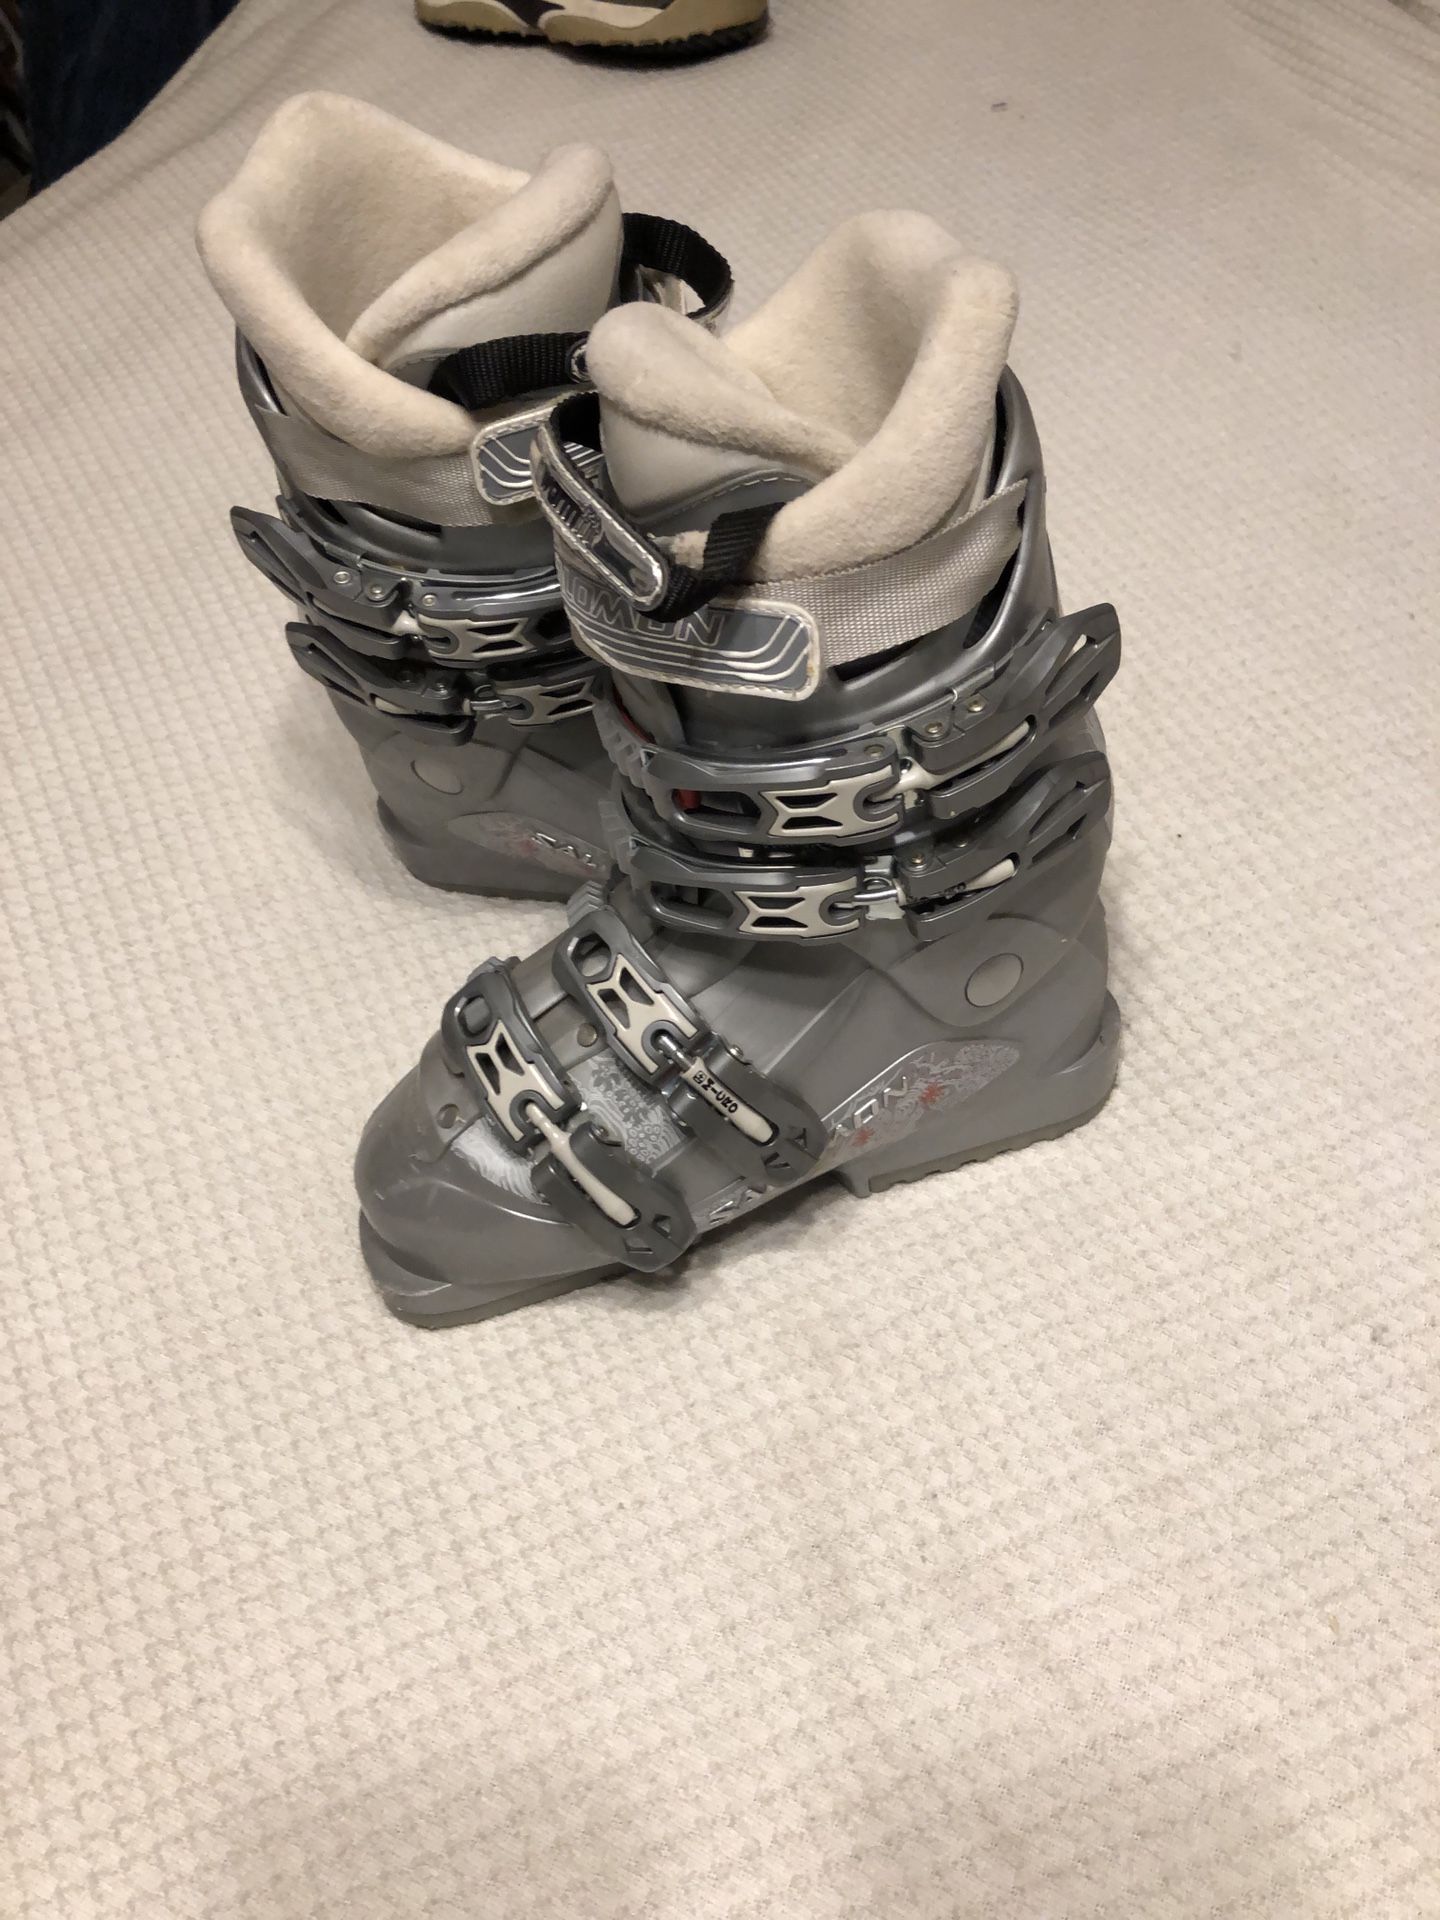 New Salomon Size 6 - 7 Women’s Top Line  Ski Boots  Immediate Delivery